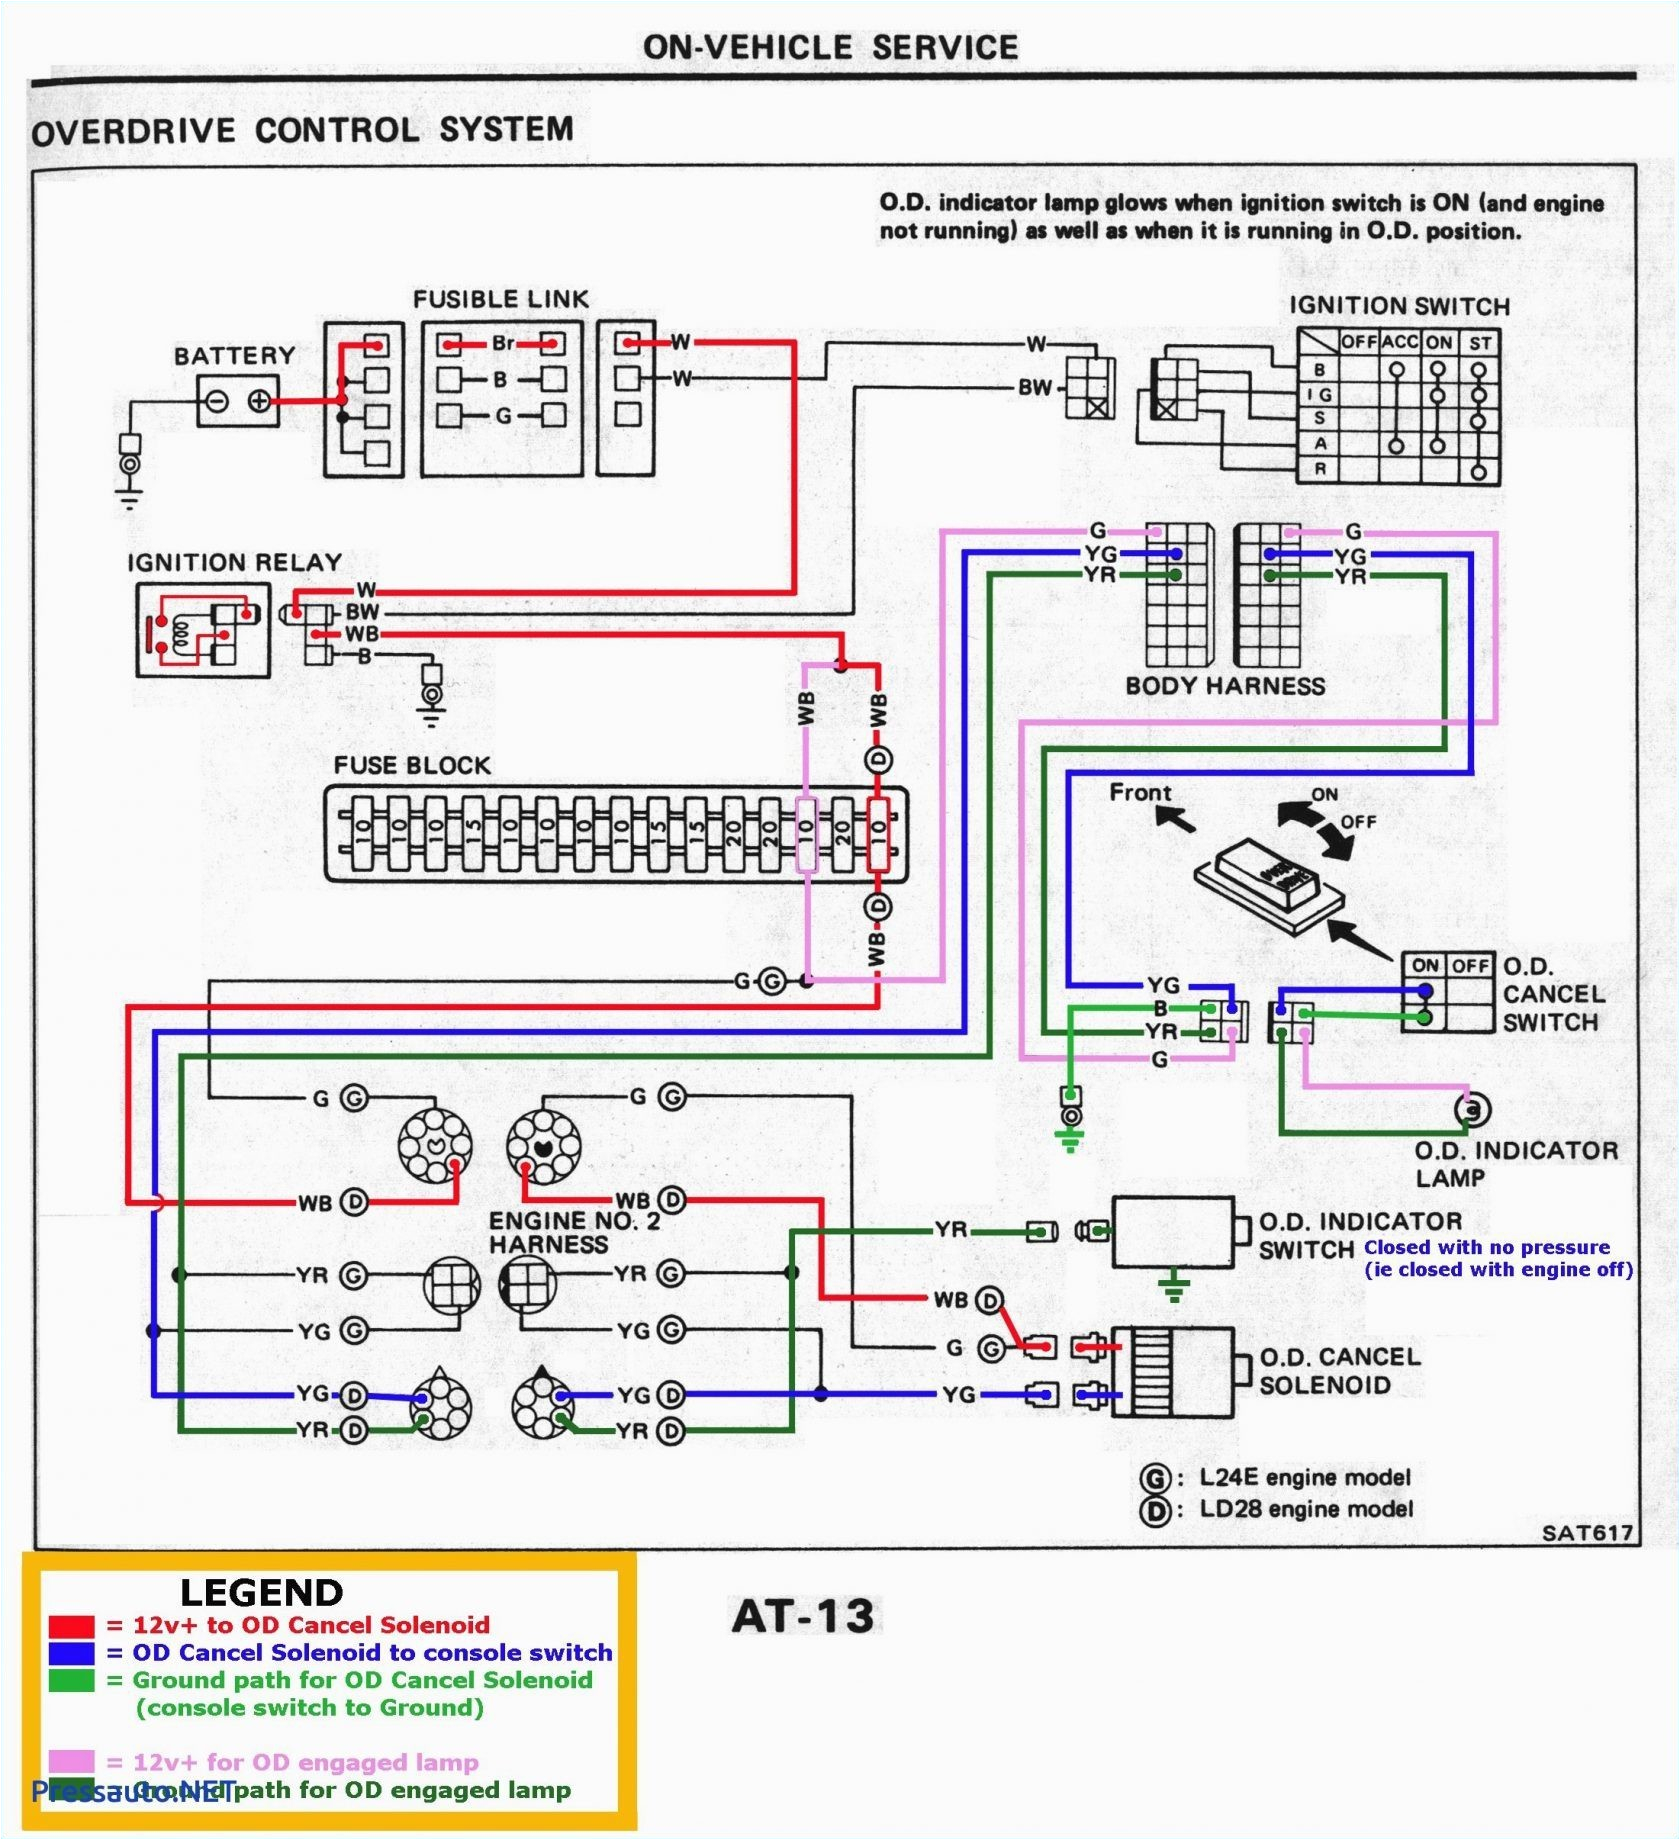 carvin b wiring diagrams wiring diagram carvin b wiring diagrams wiring diagramscarvin wiring diagrams wiring diagram